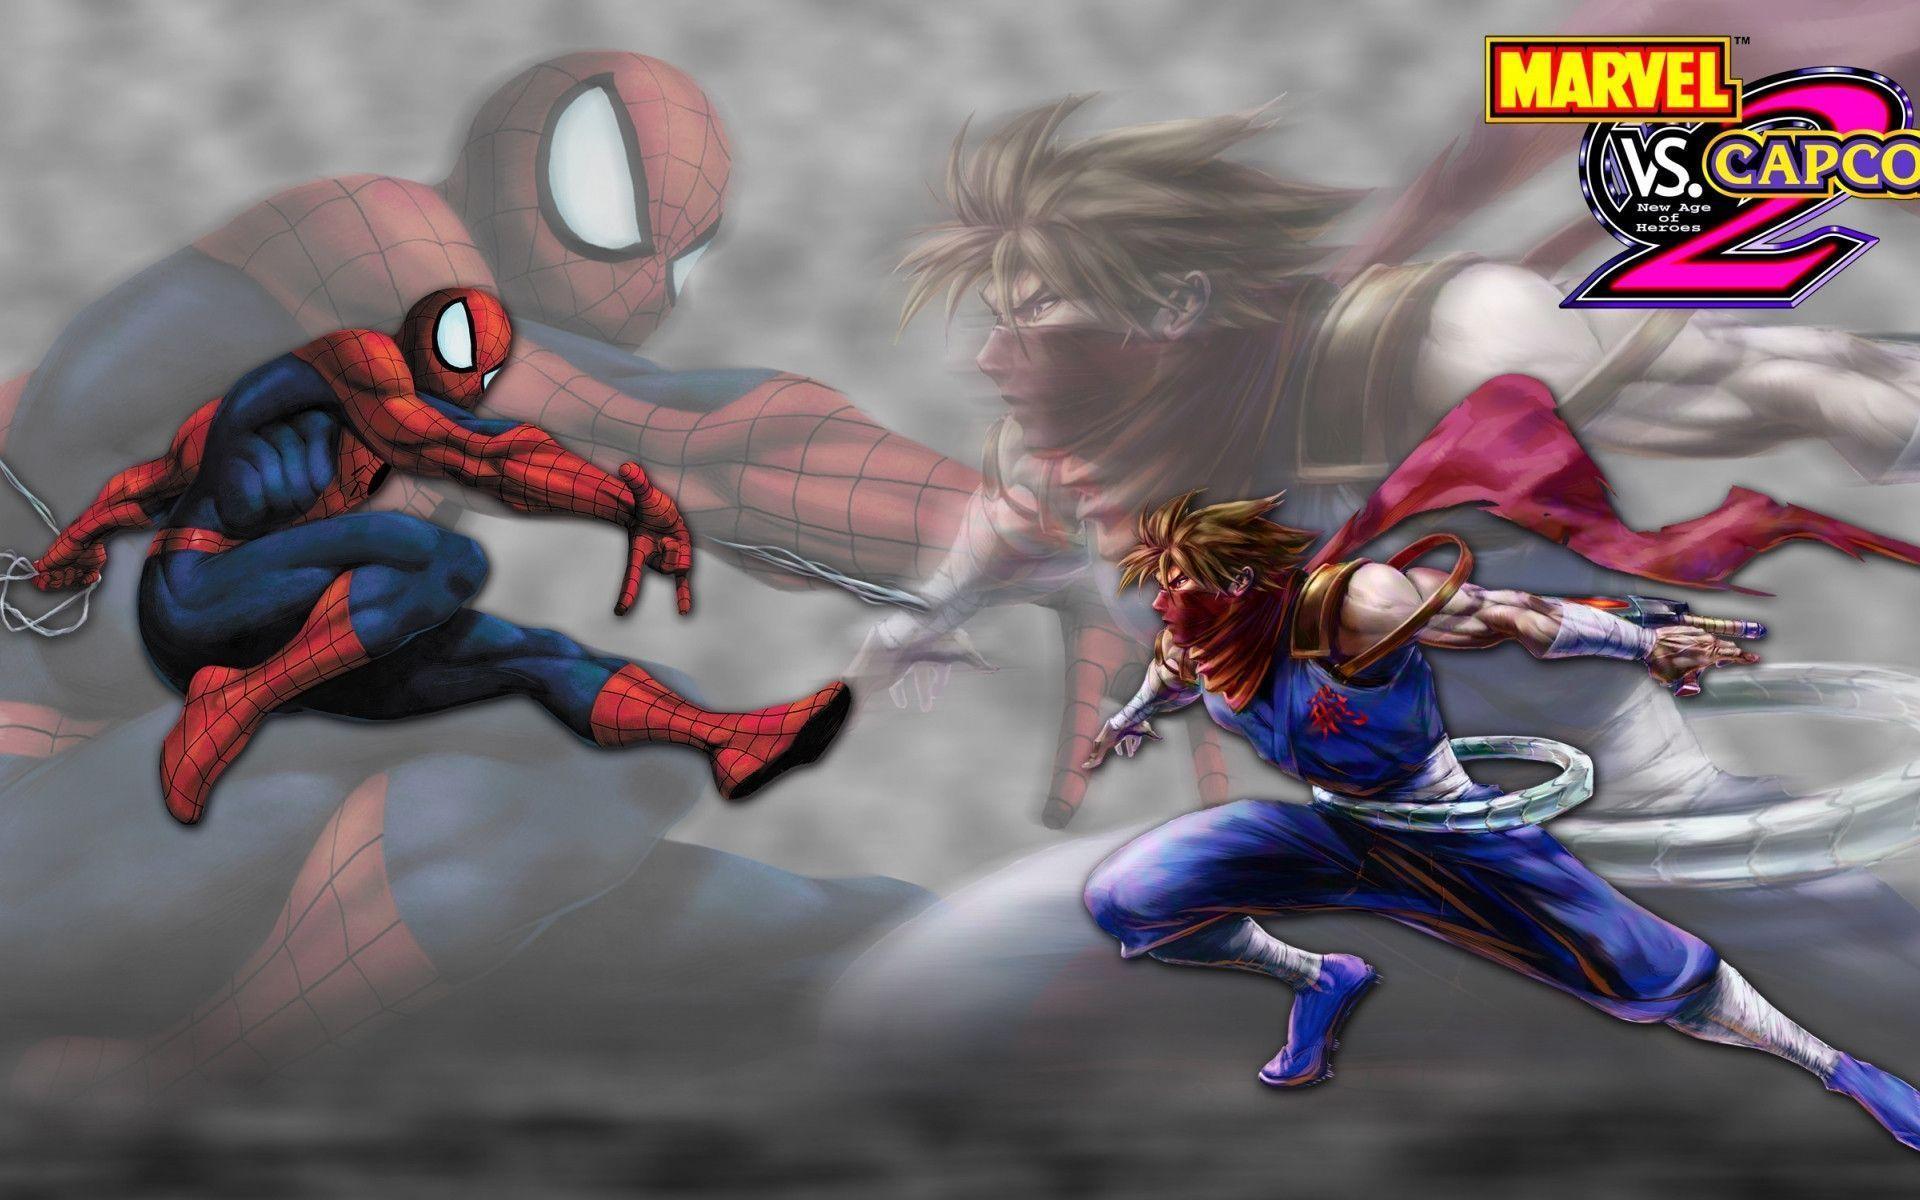 Marvel Vs Capcom 2 wallpapers